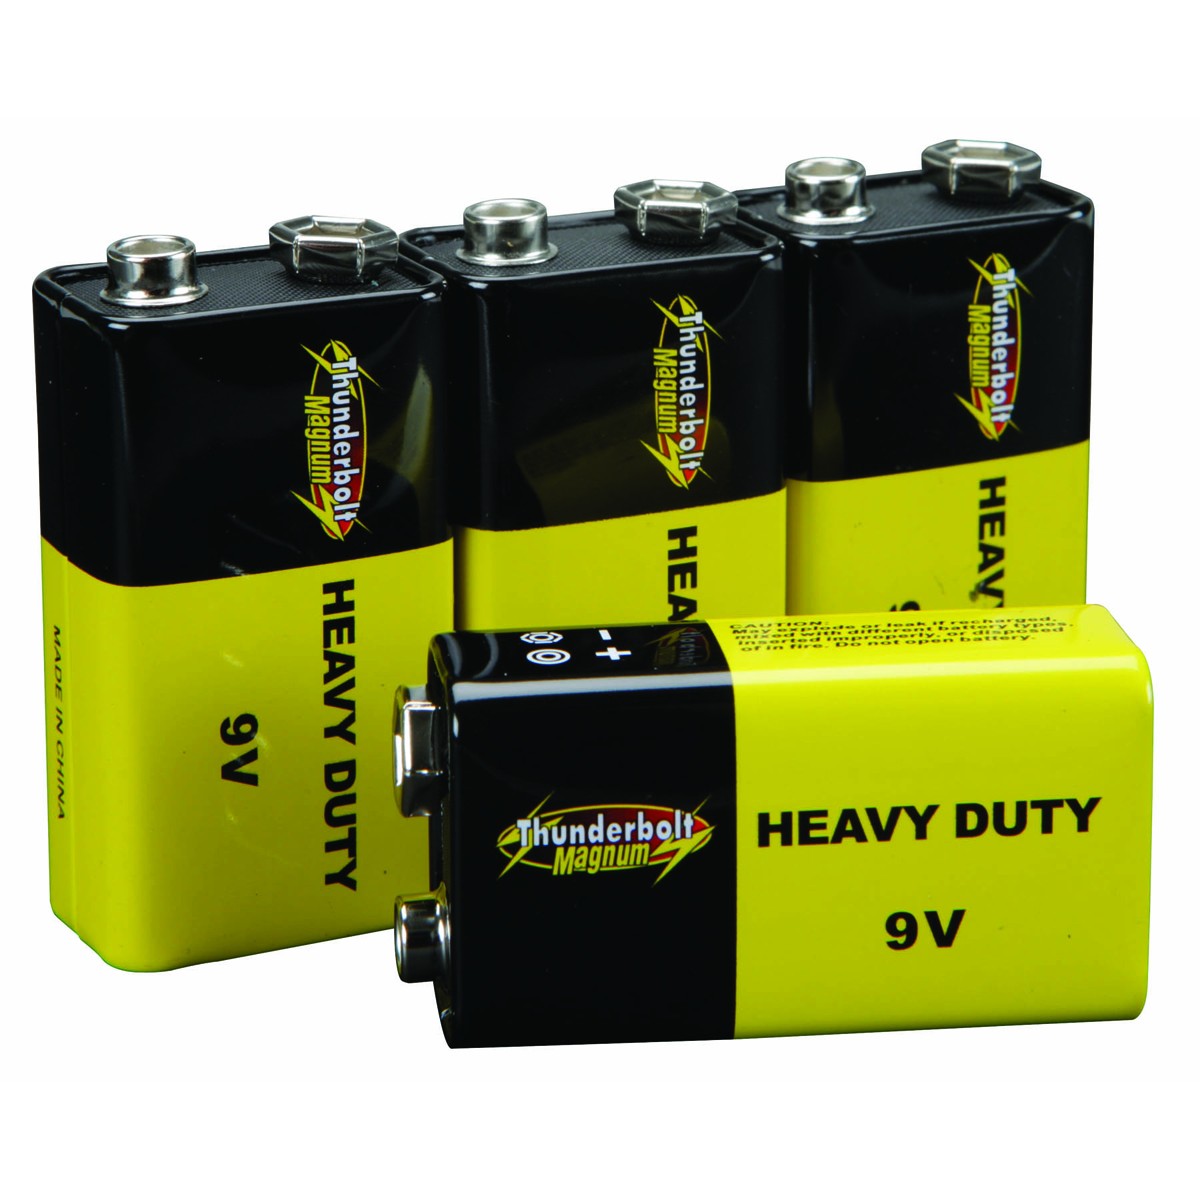 THUNDERBOLT Heavy Duty Batteries 9V - 4 Pk. - Item 68383